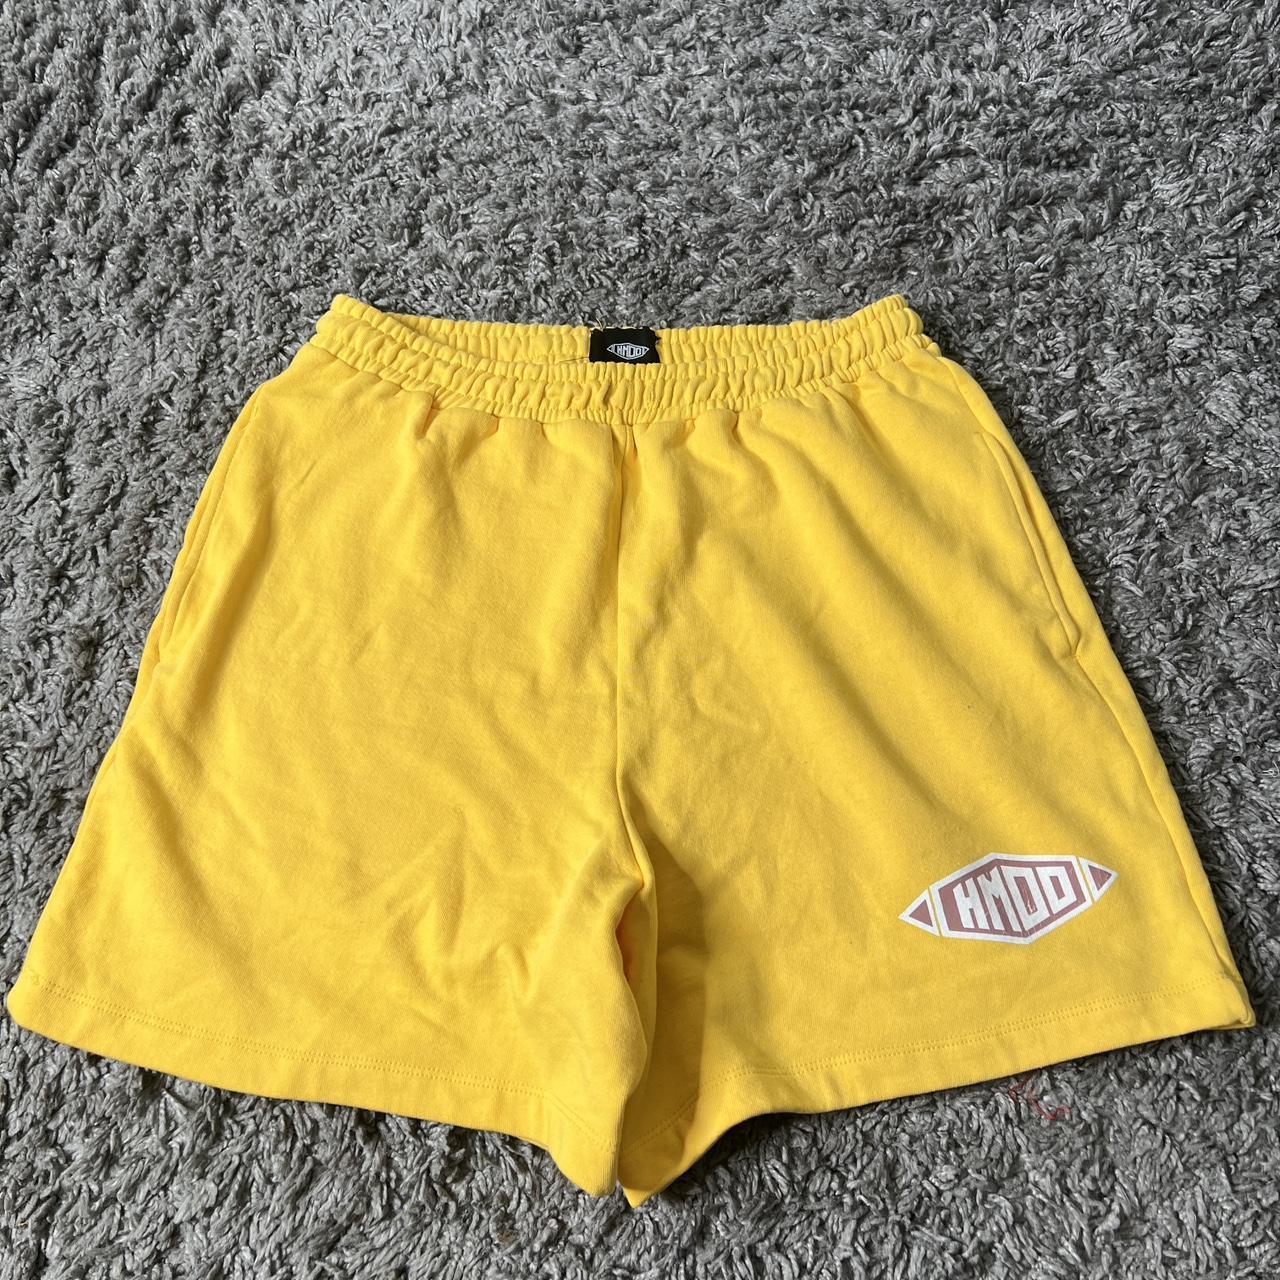 HMDDLA cotton logo shorts - Depop